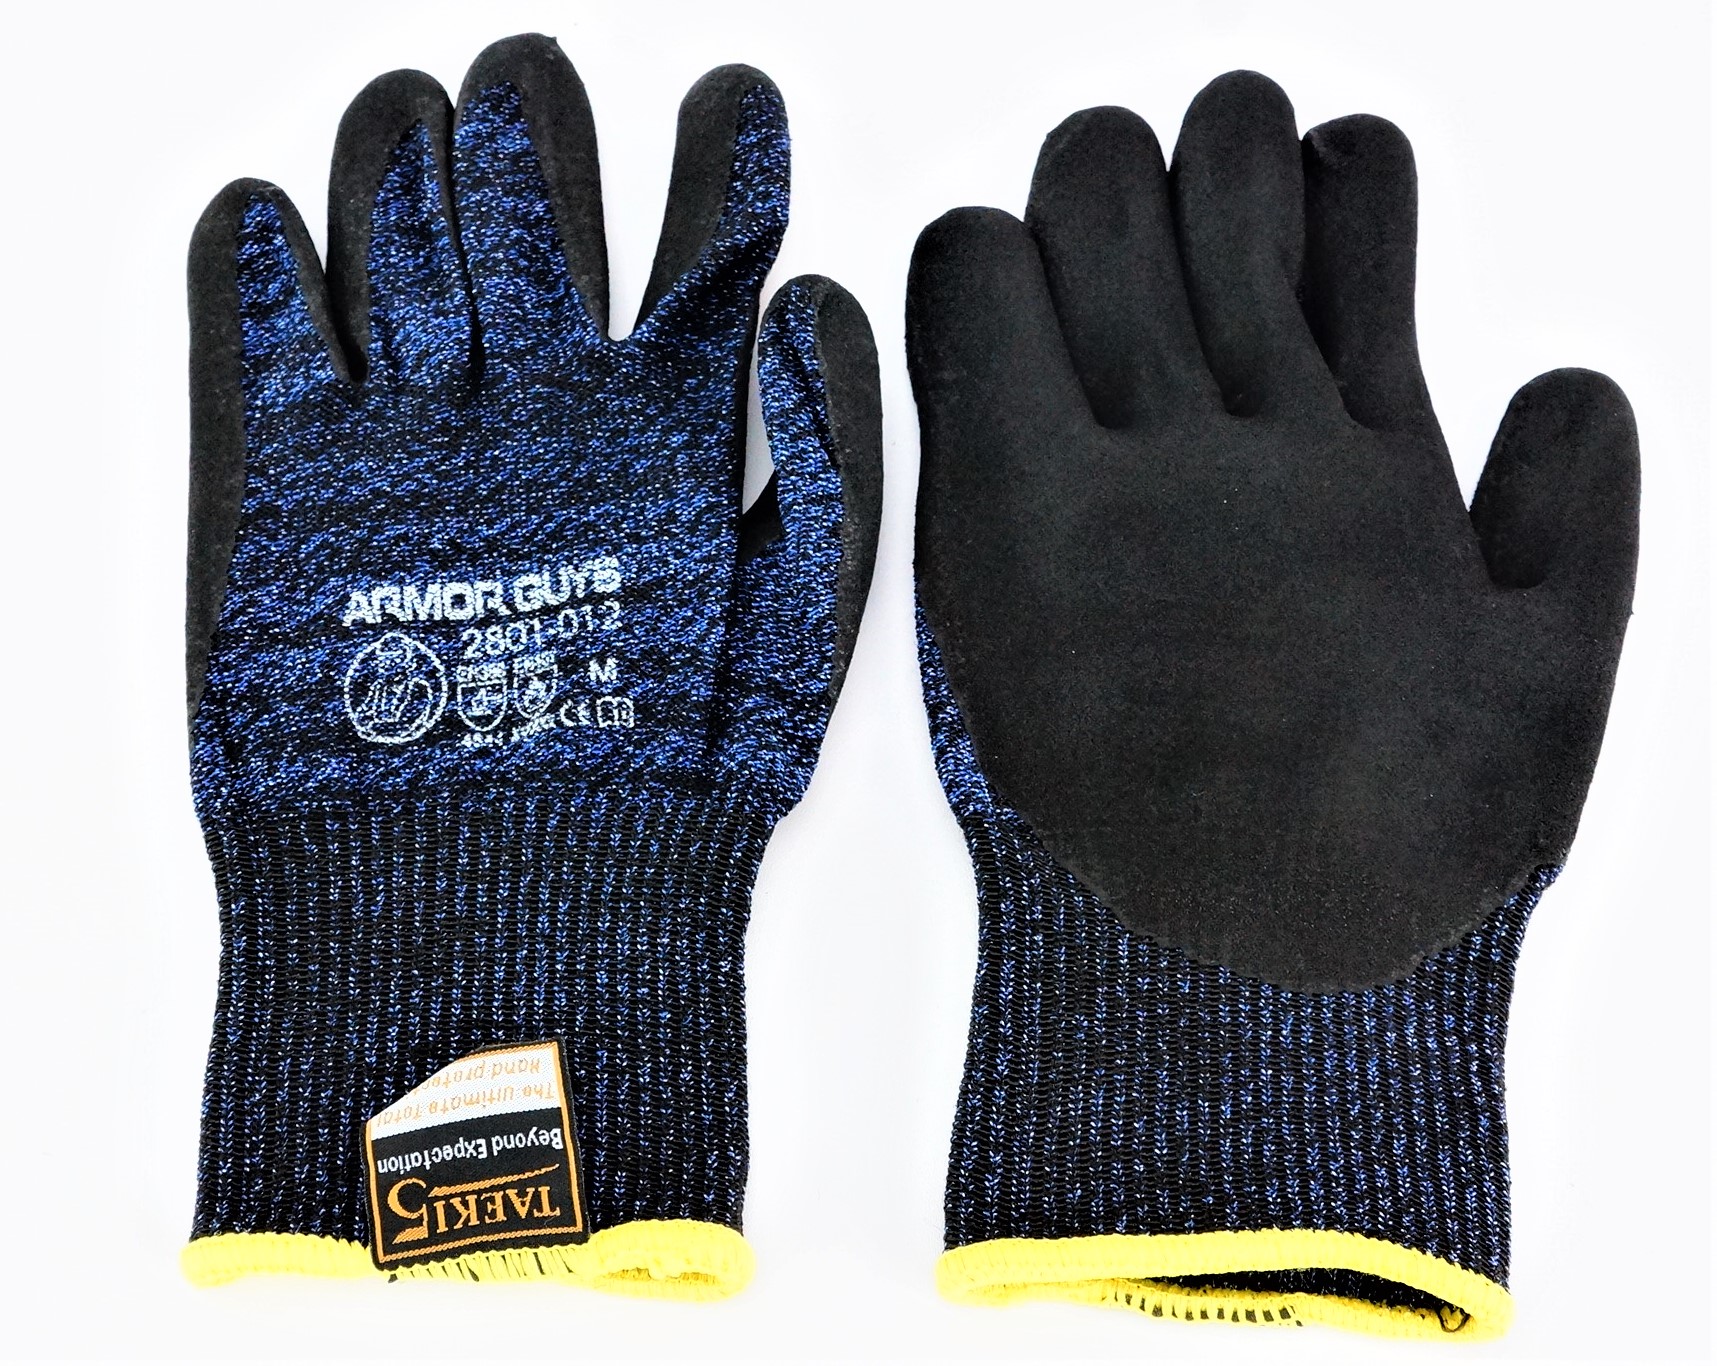 12 Pair 01-012-M Armor Guys Glove Taeki5 Spun Fiber Foam Palm Coated Blue Med - image 3